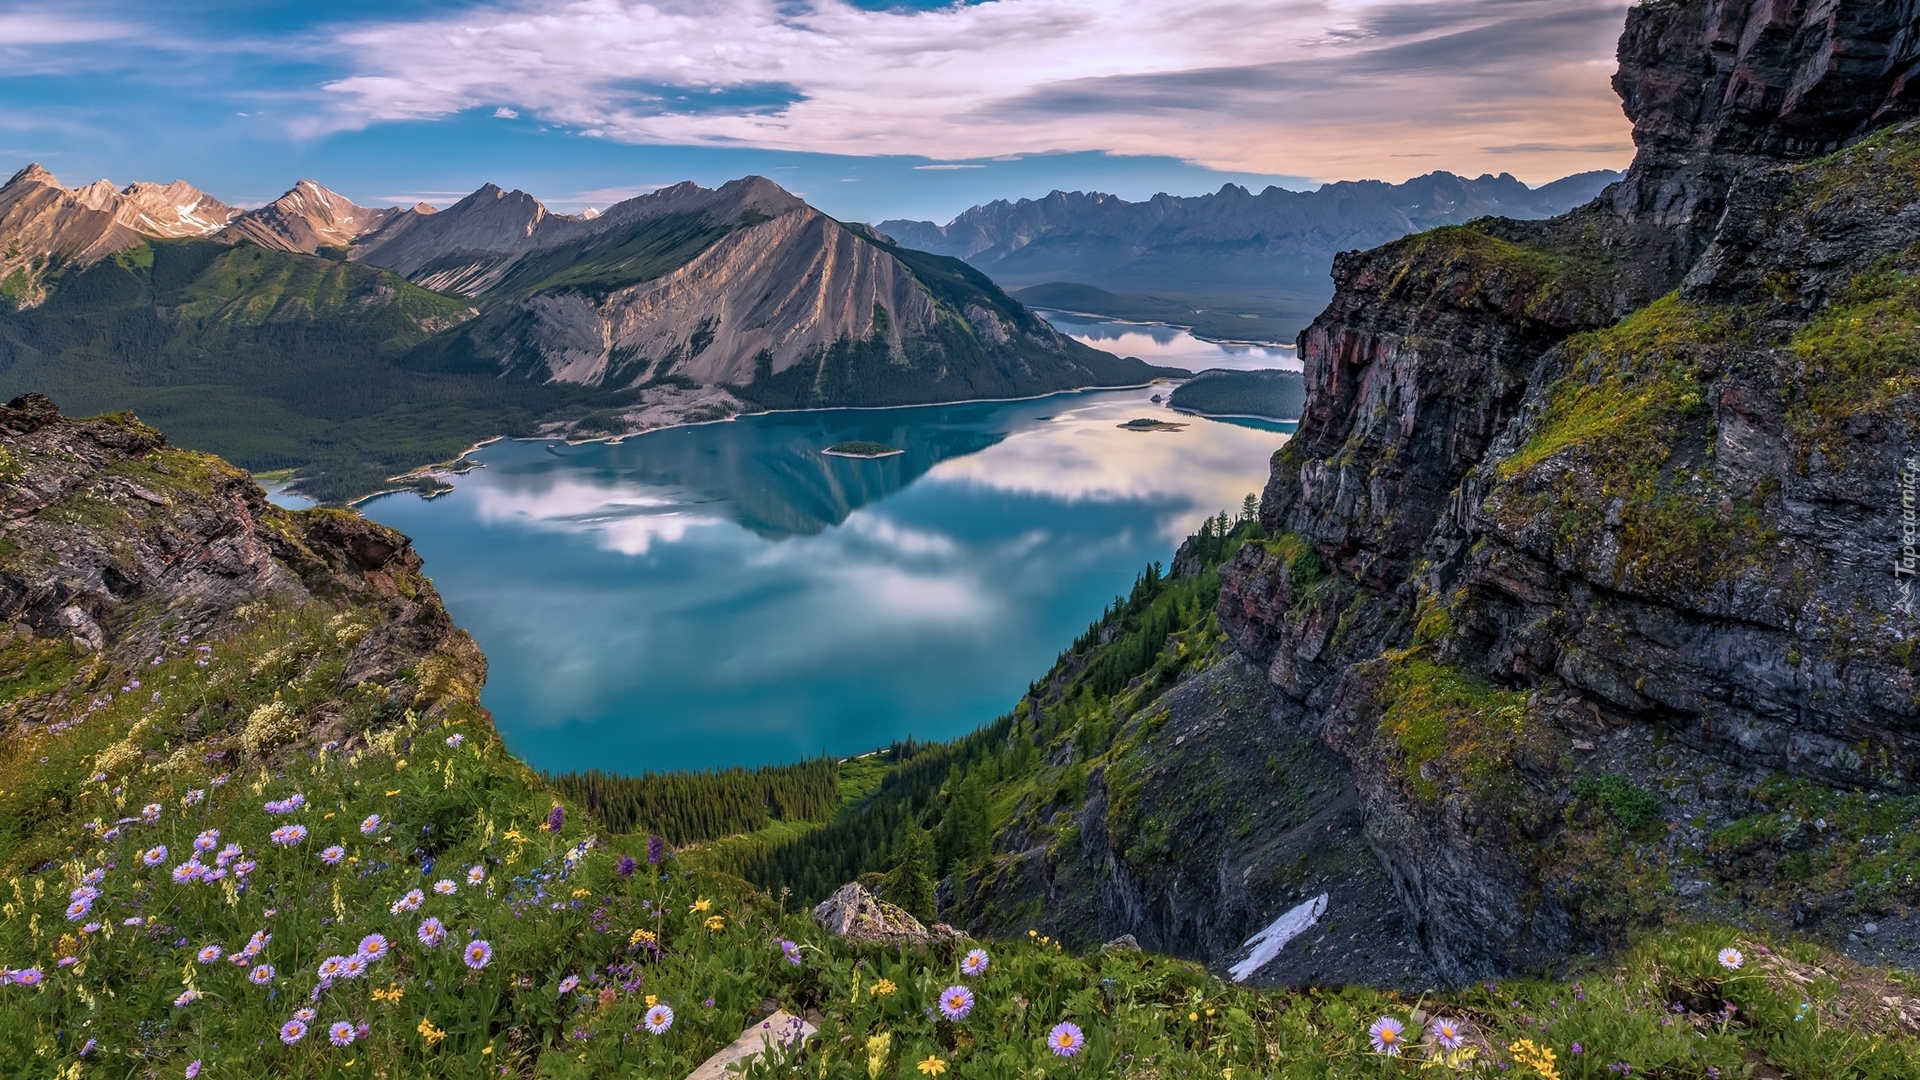 Kanada, Jezioro Upper Kananaskis Lake, Park Prowincjonalny Petera Lougheeda, Kwiaty, Góry, Chmury